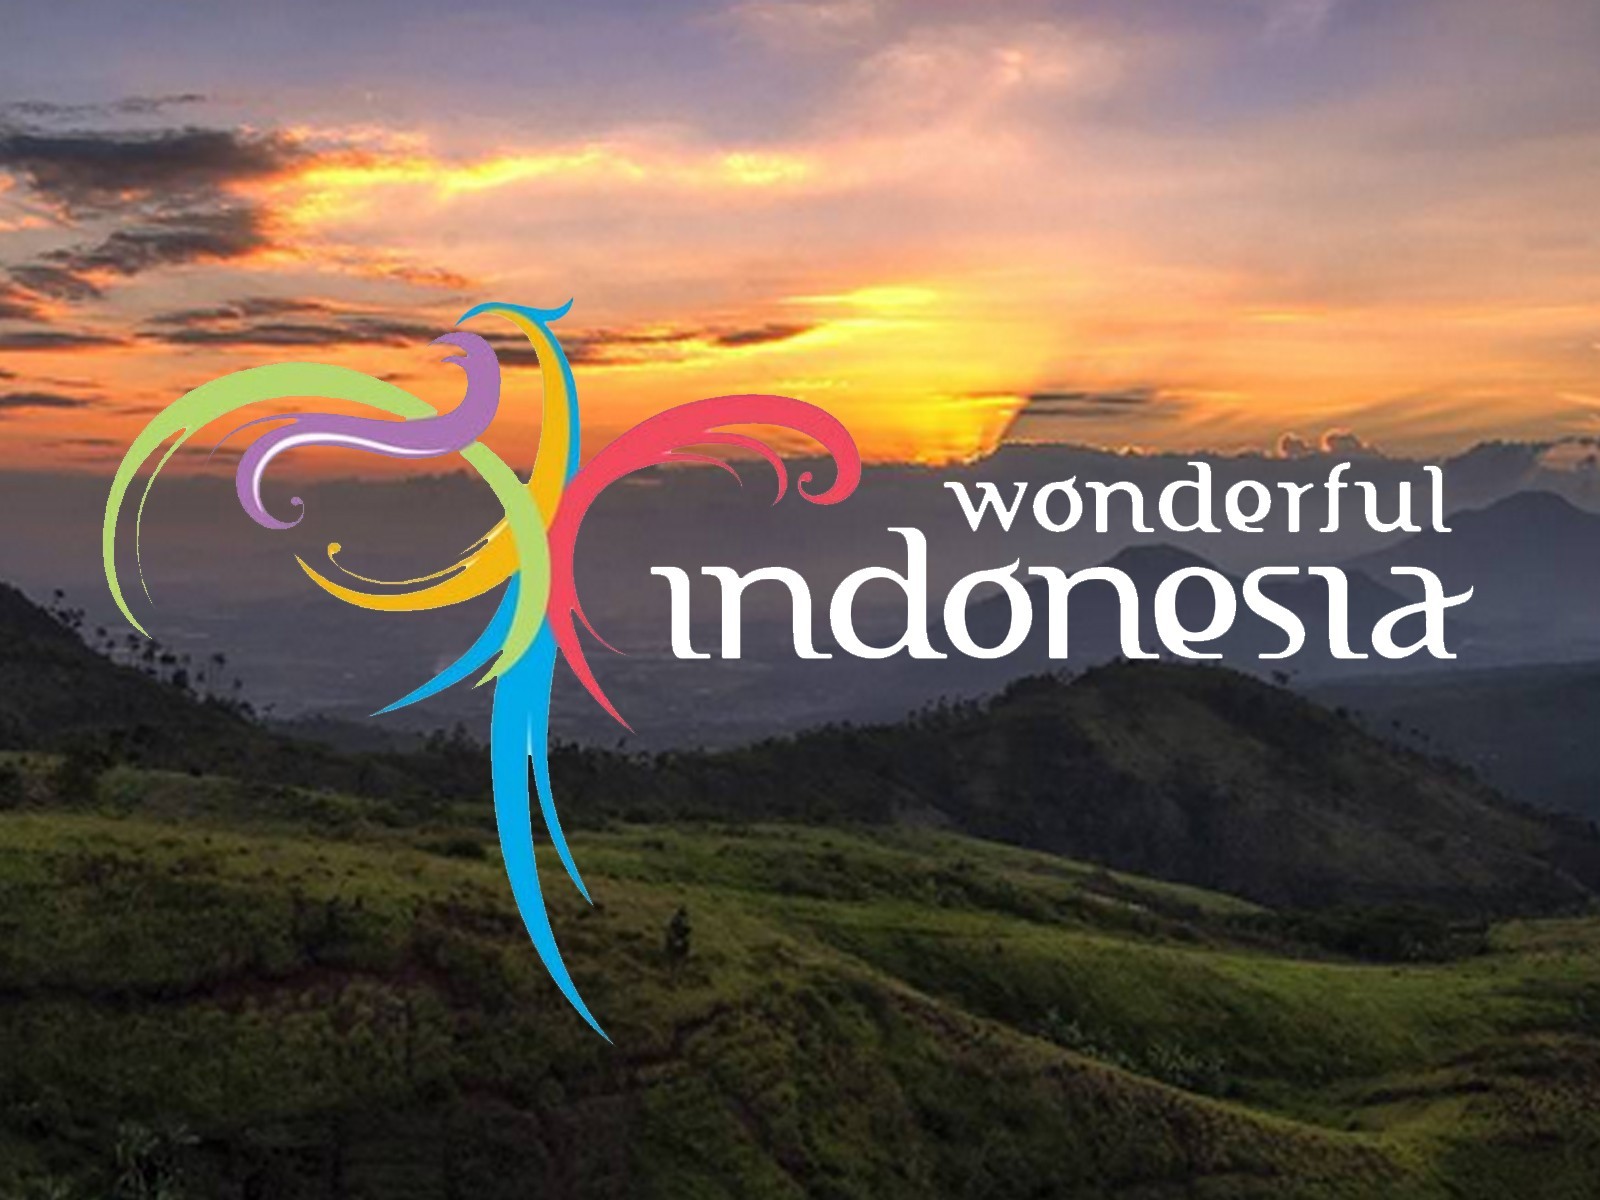 JOJO Wonderful Indonesia  Bali holiday tour popular 